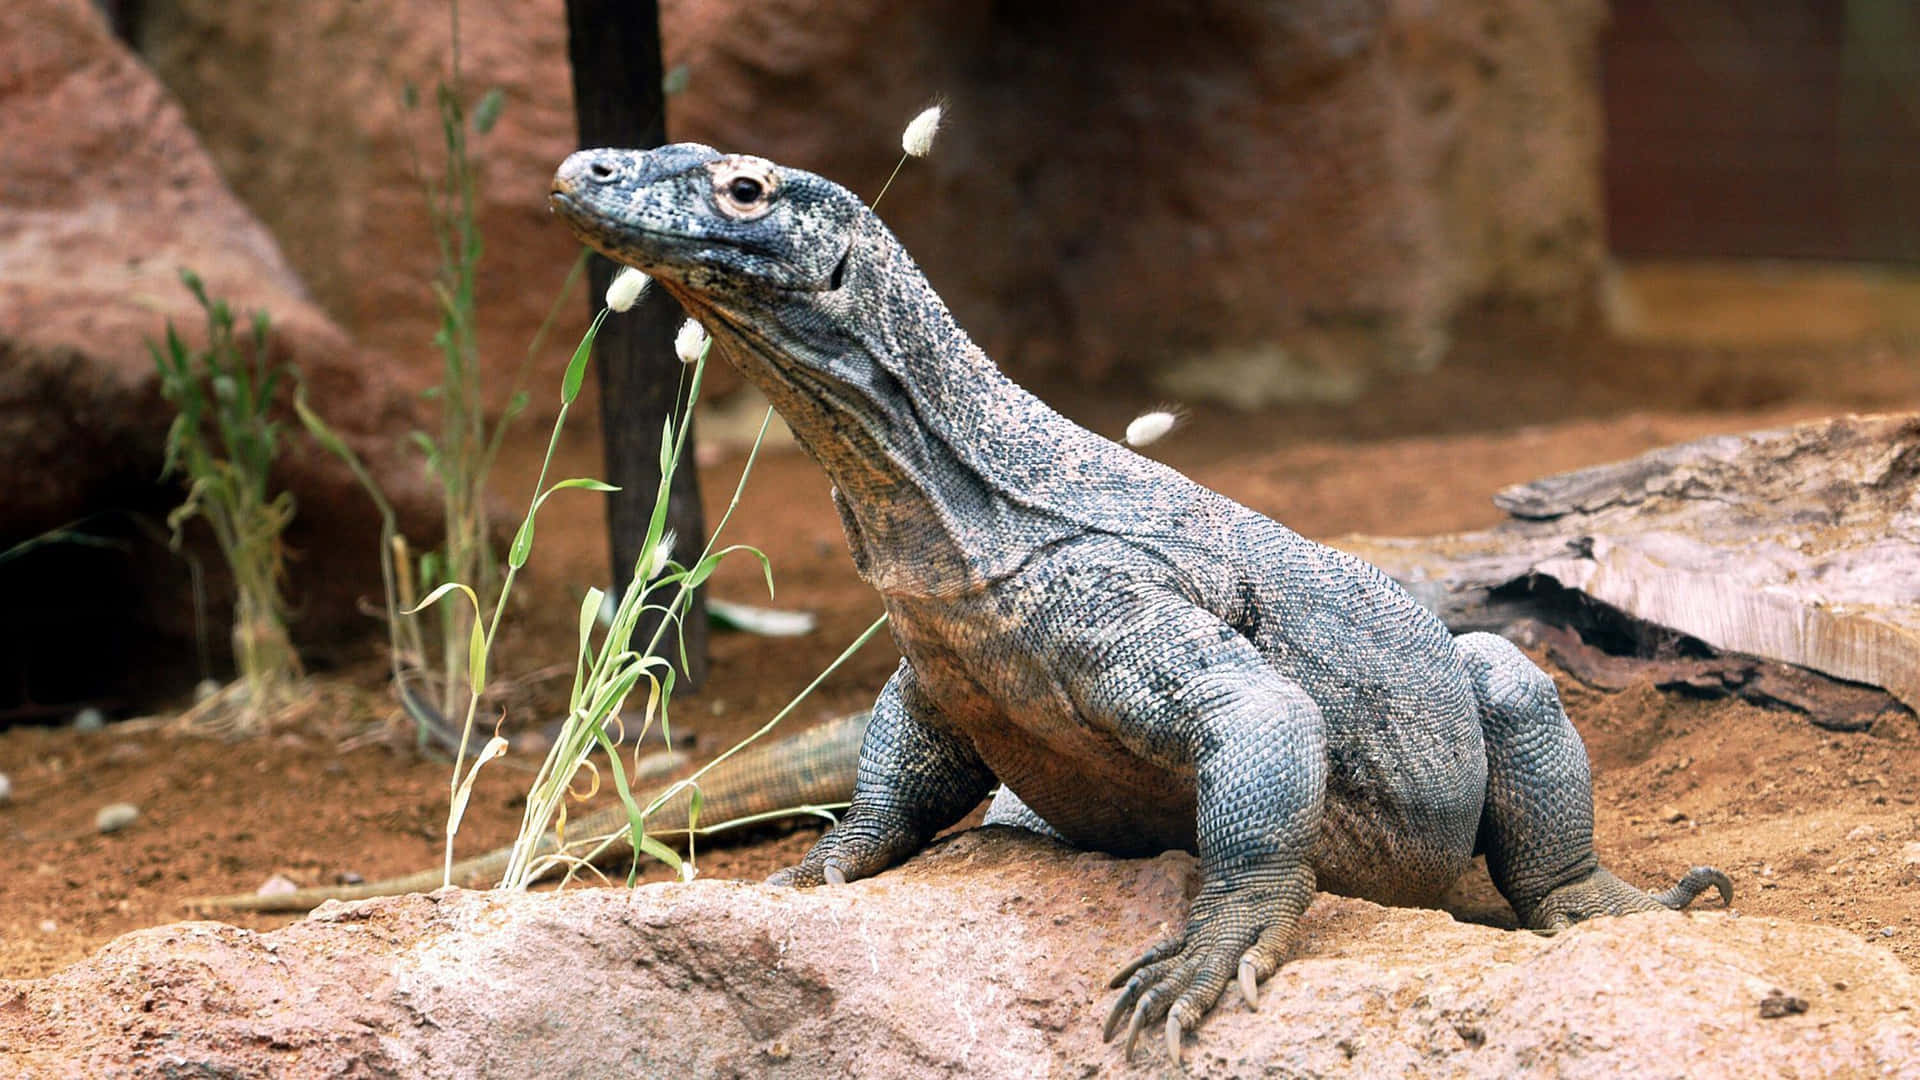 "A Komodo Dragon looking out into its natural habitat"